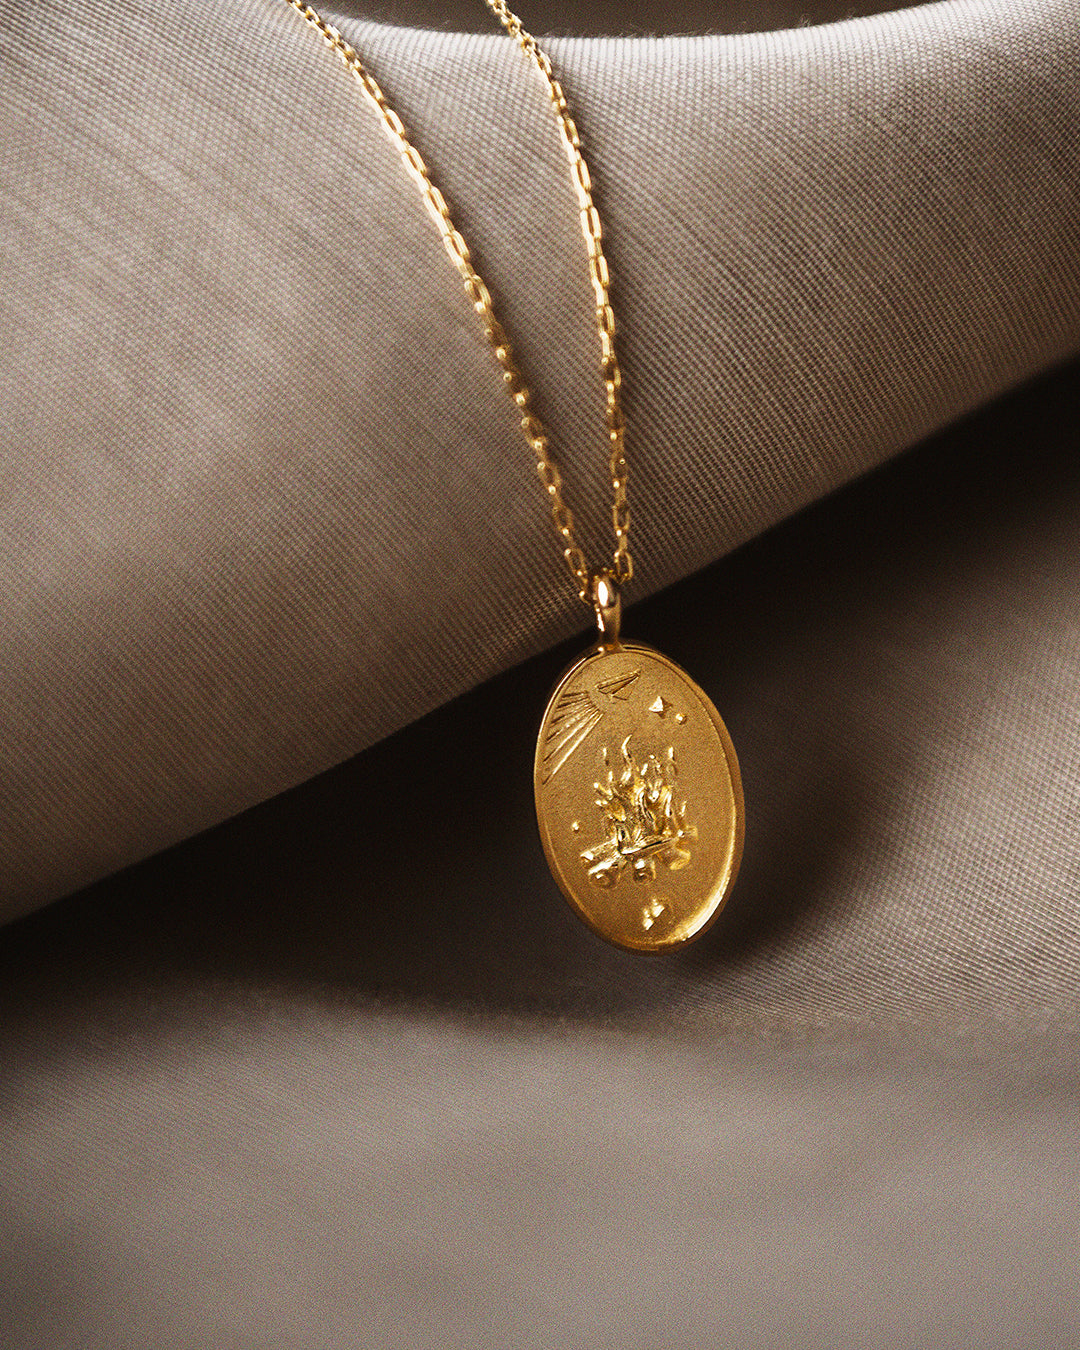 ASOS DESIGN 14k gold plated necklace with zodiac sagittarius pendant | ASOS